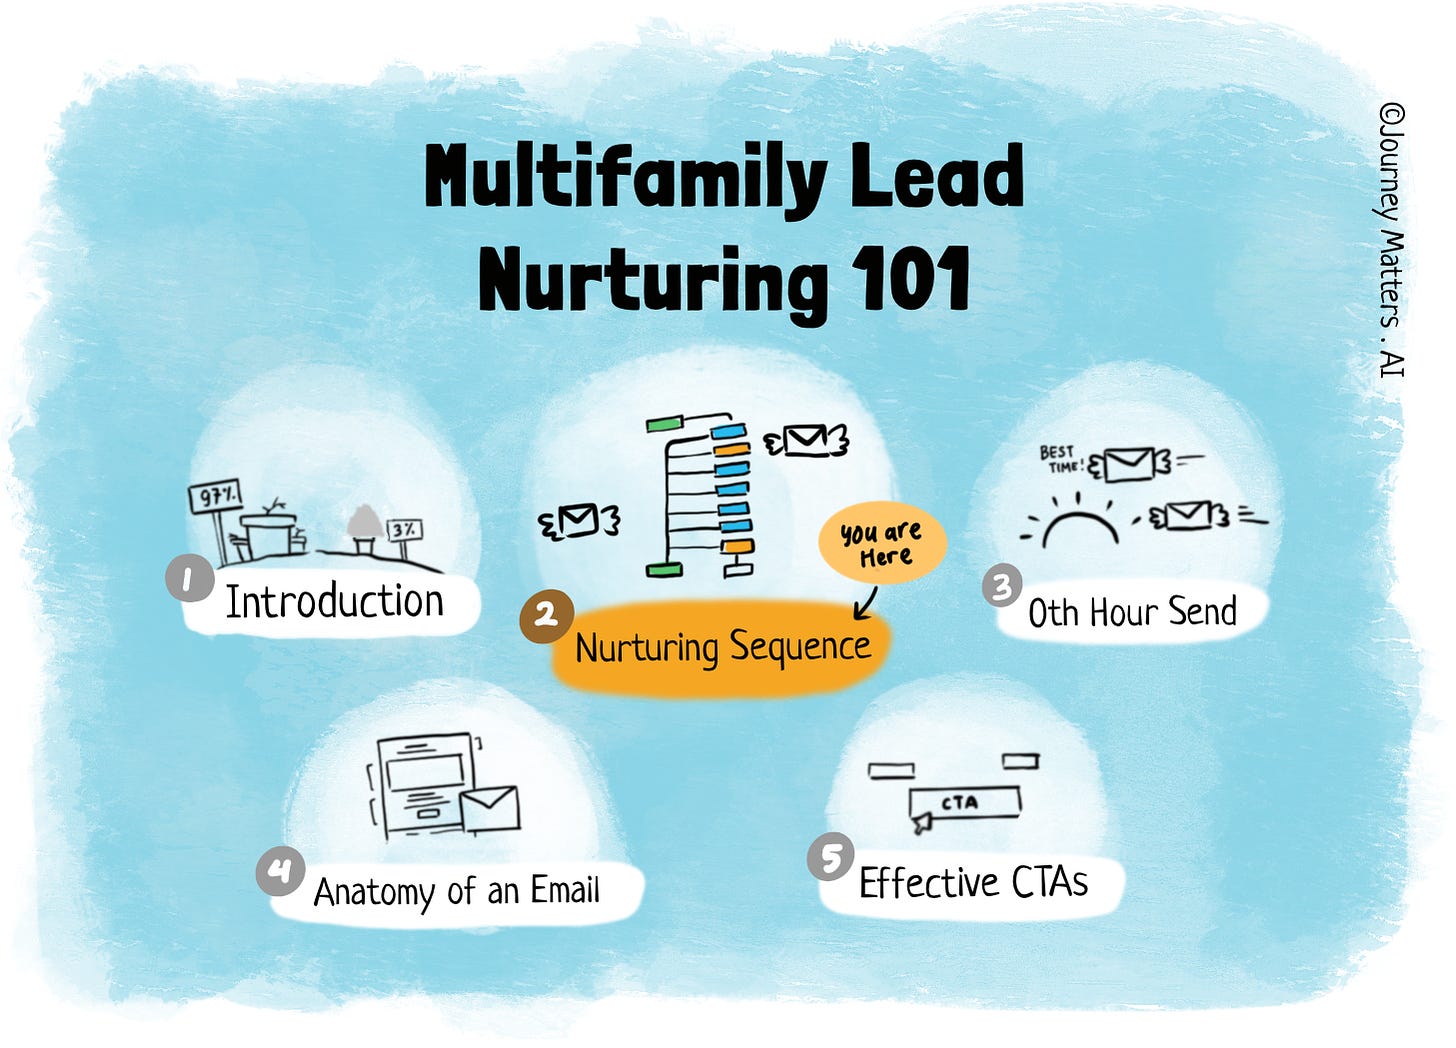 Part 2 of Multifamily Lead Nurturing- The Nurturing Sequence